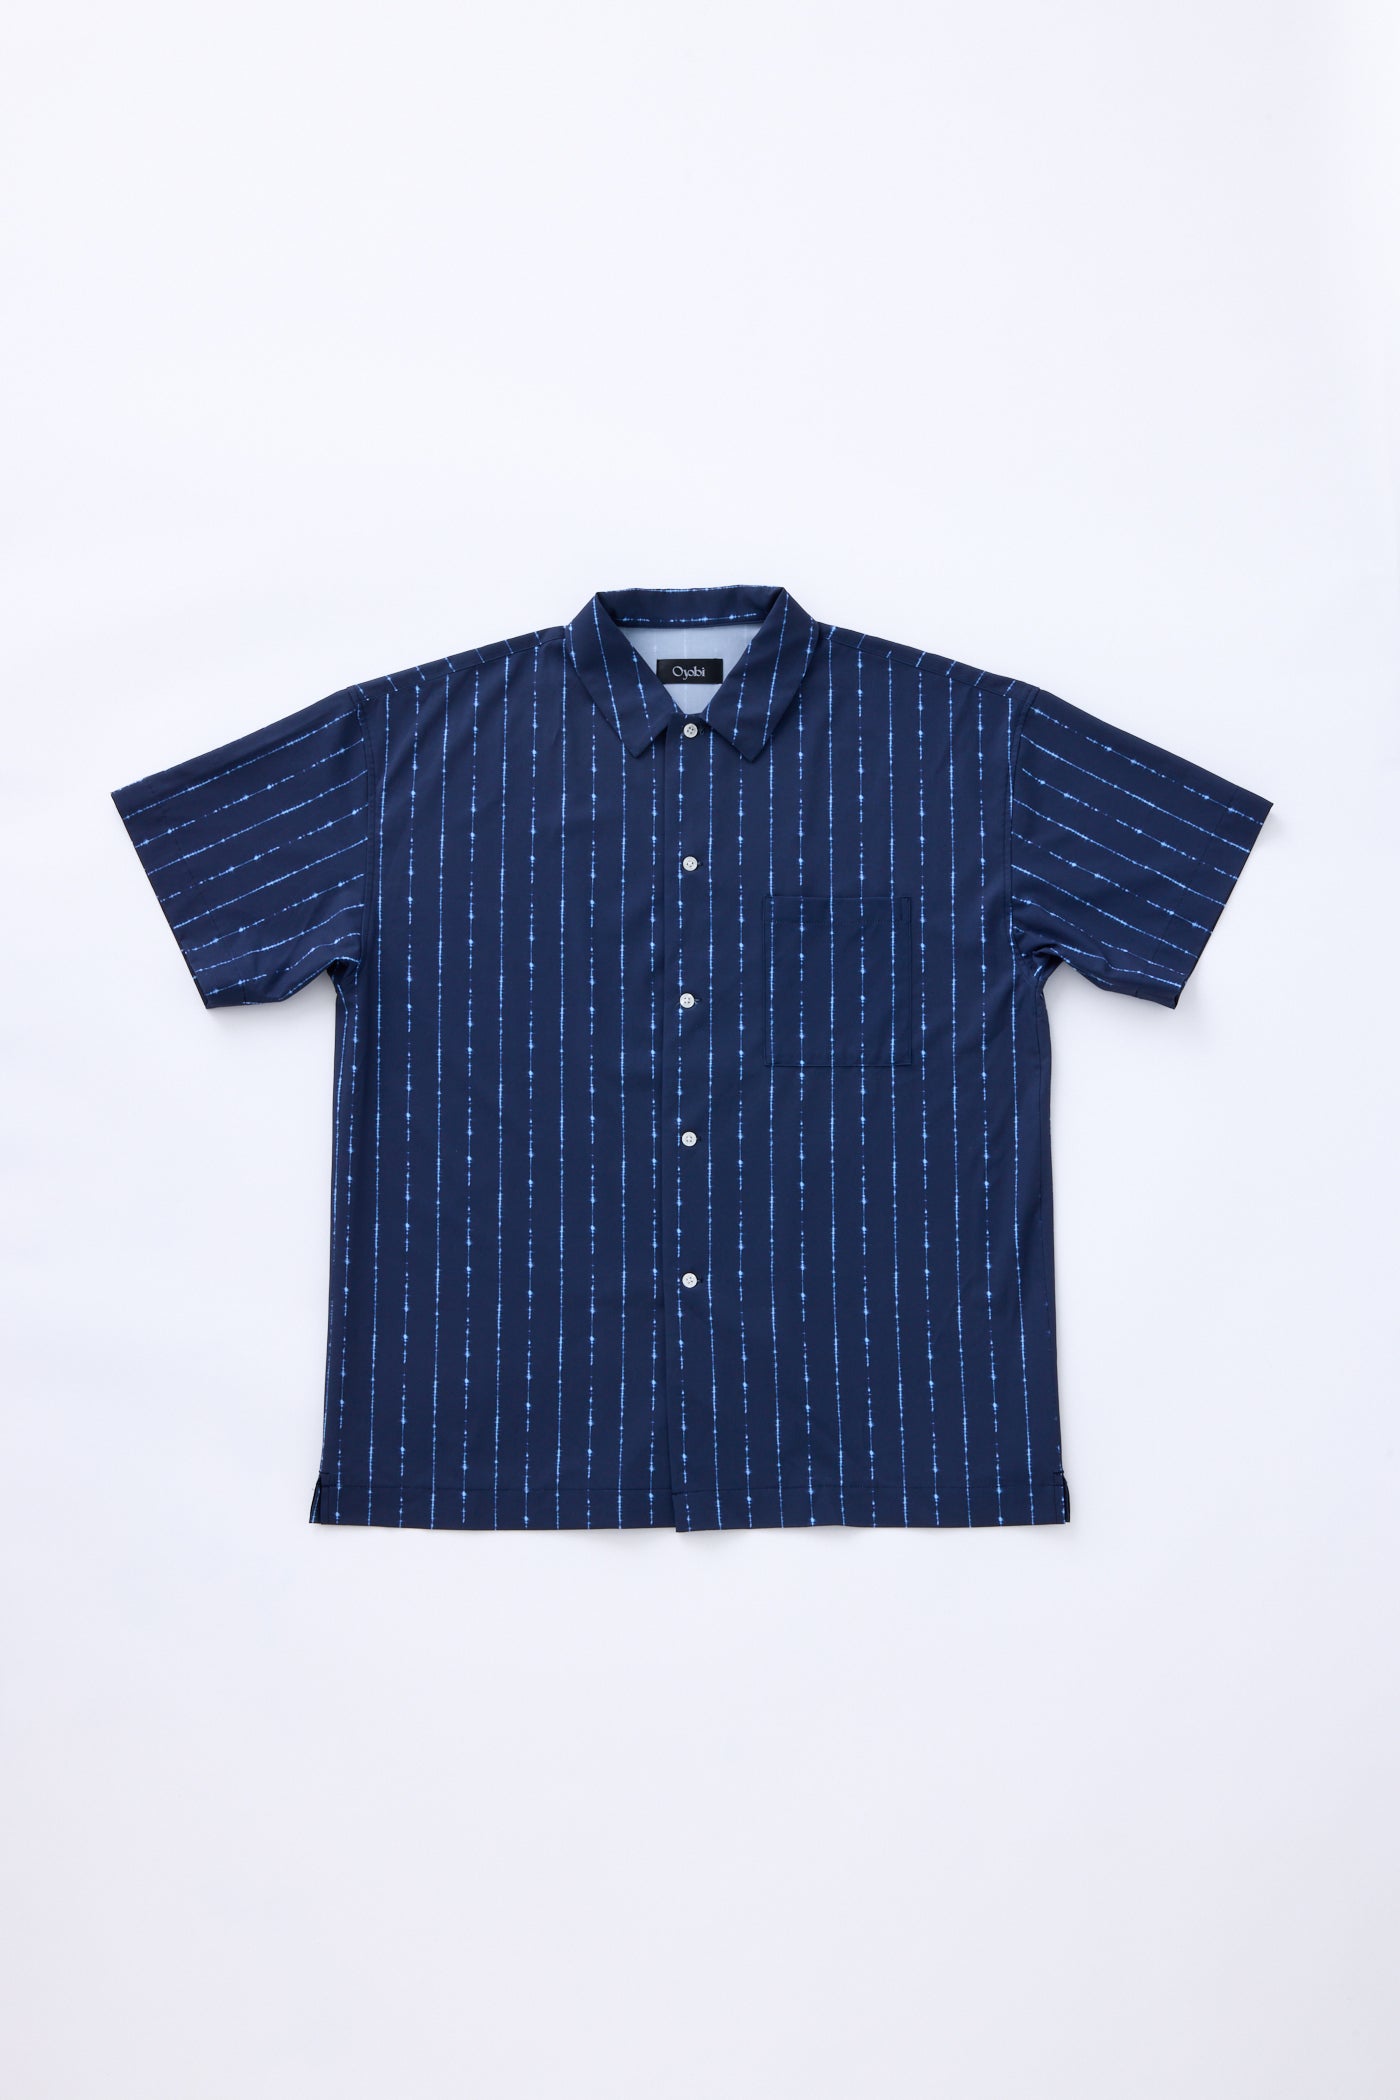 Indigo Stripe Print S/S Shirt (M)